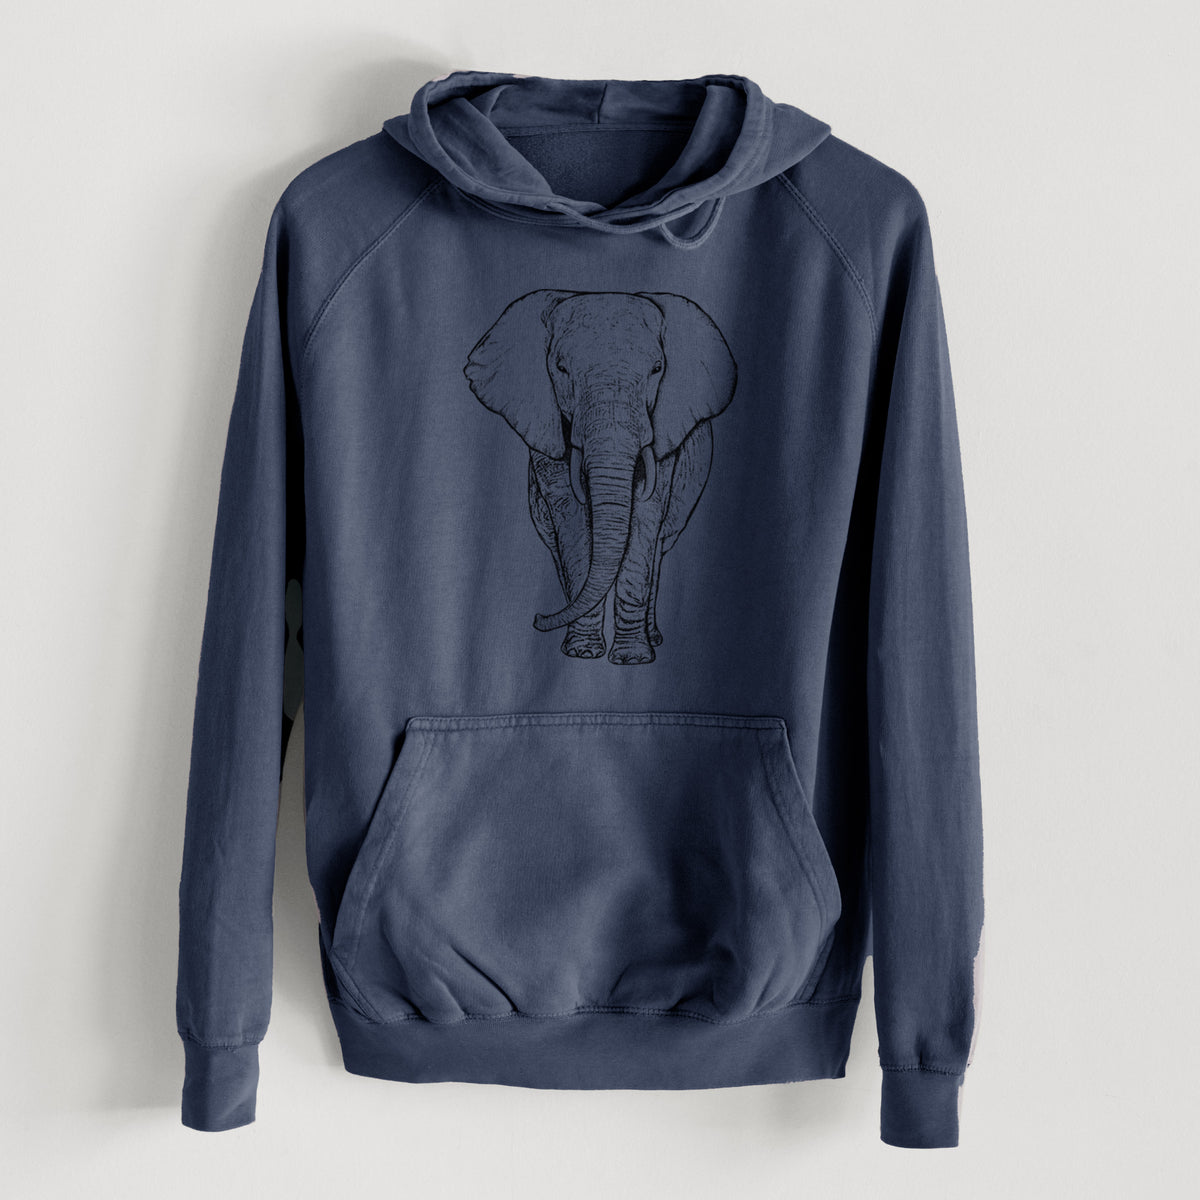 Loxodonta africana - African Elephant  - Mid-Weight Unisex Vintage 100% Cotton Hoodie